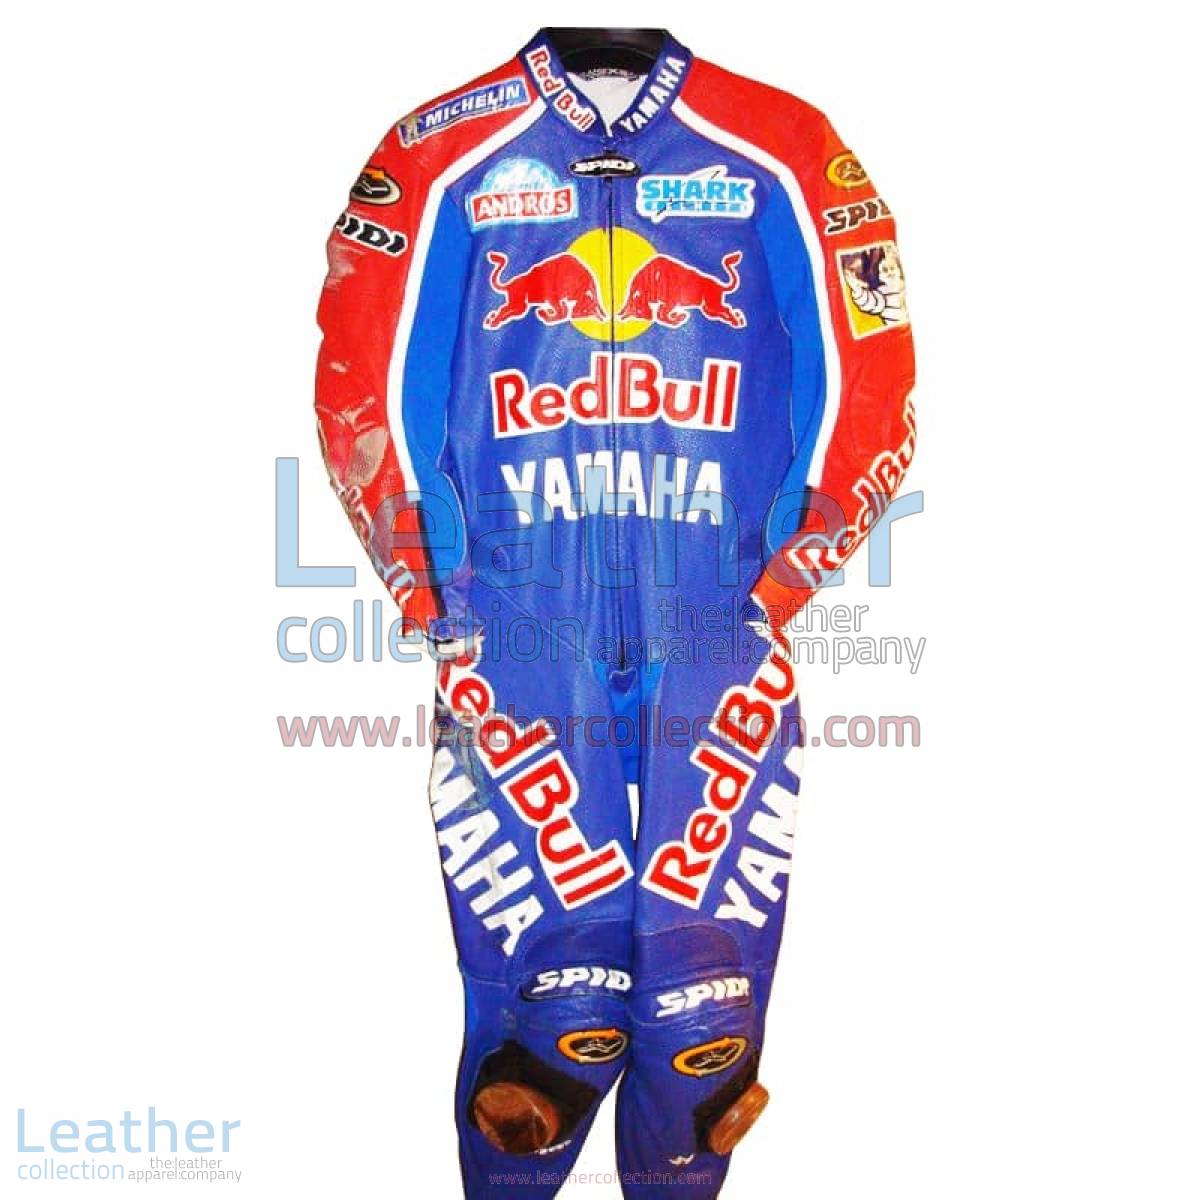 Régis Laconi Red Bull Yamaha GP 1999 Racing Suit | red bull racing suit